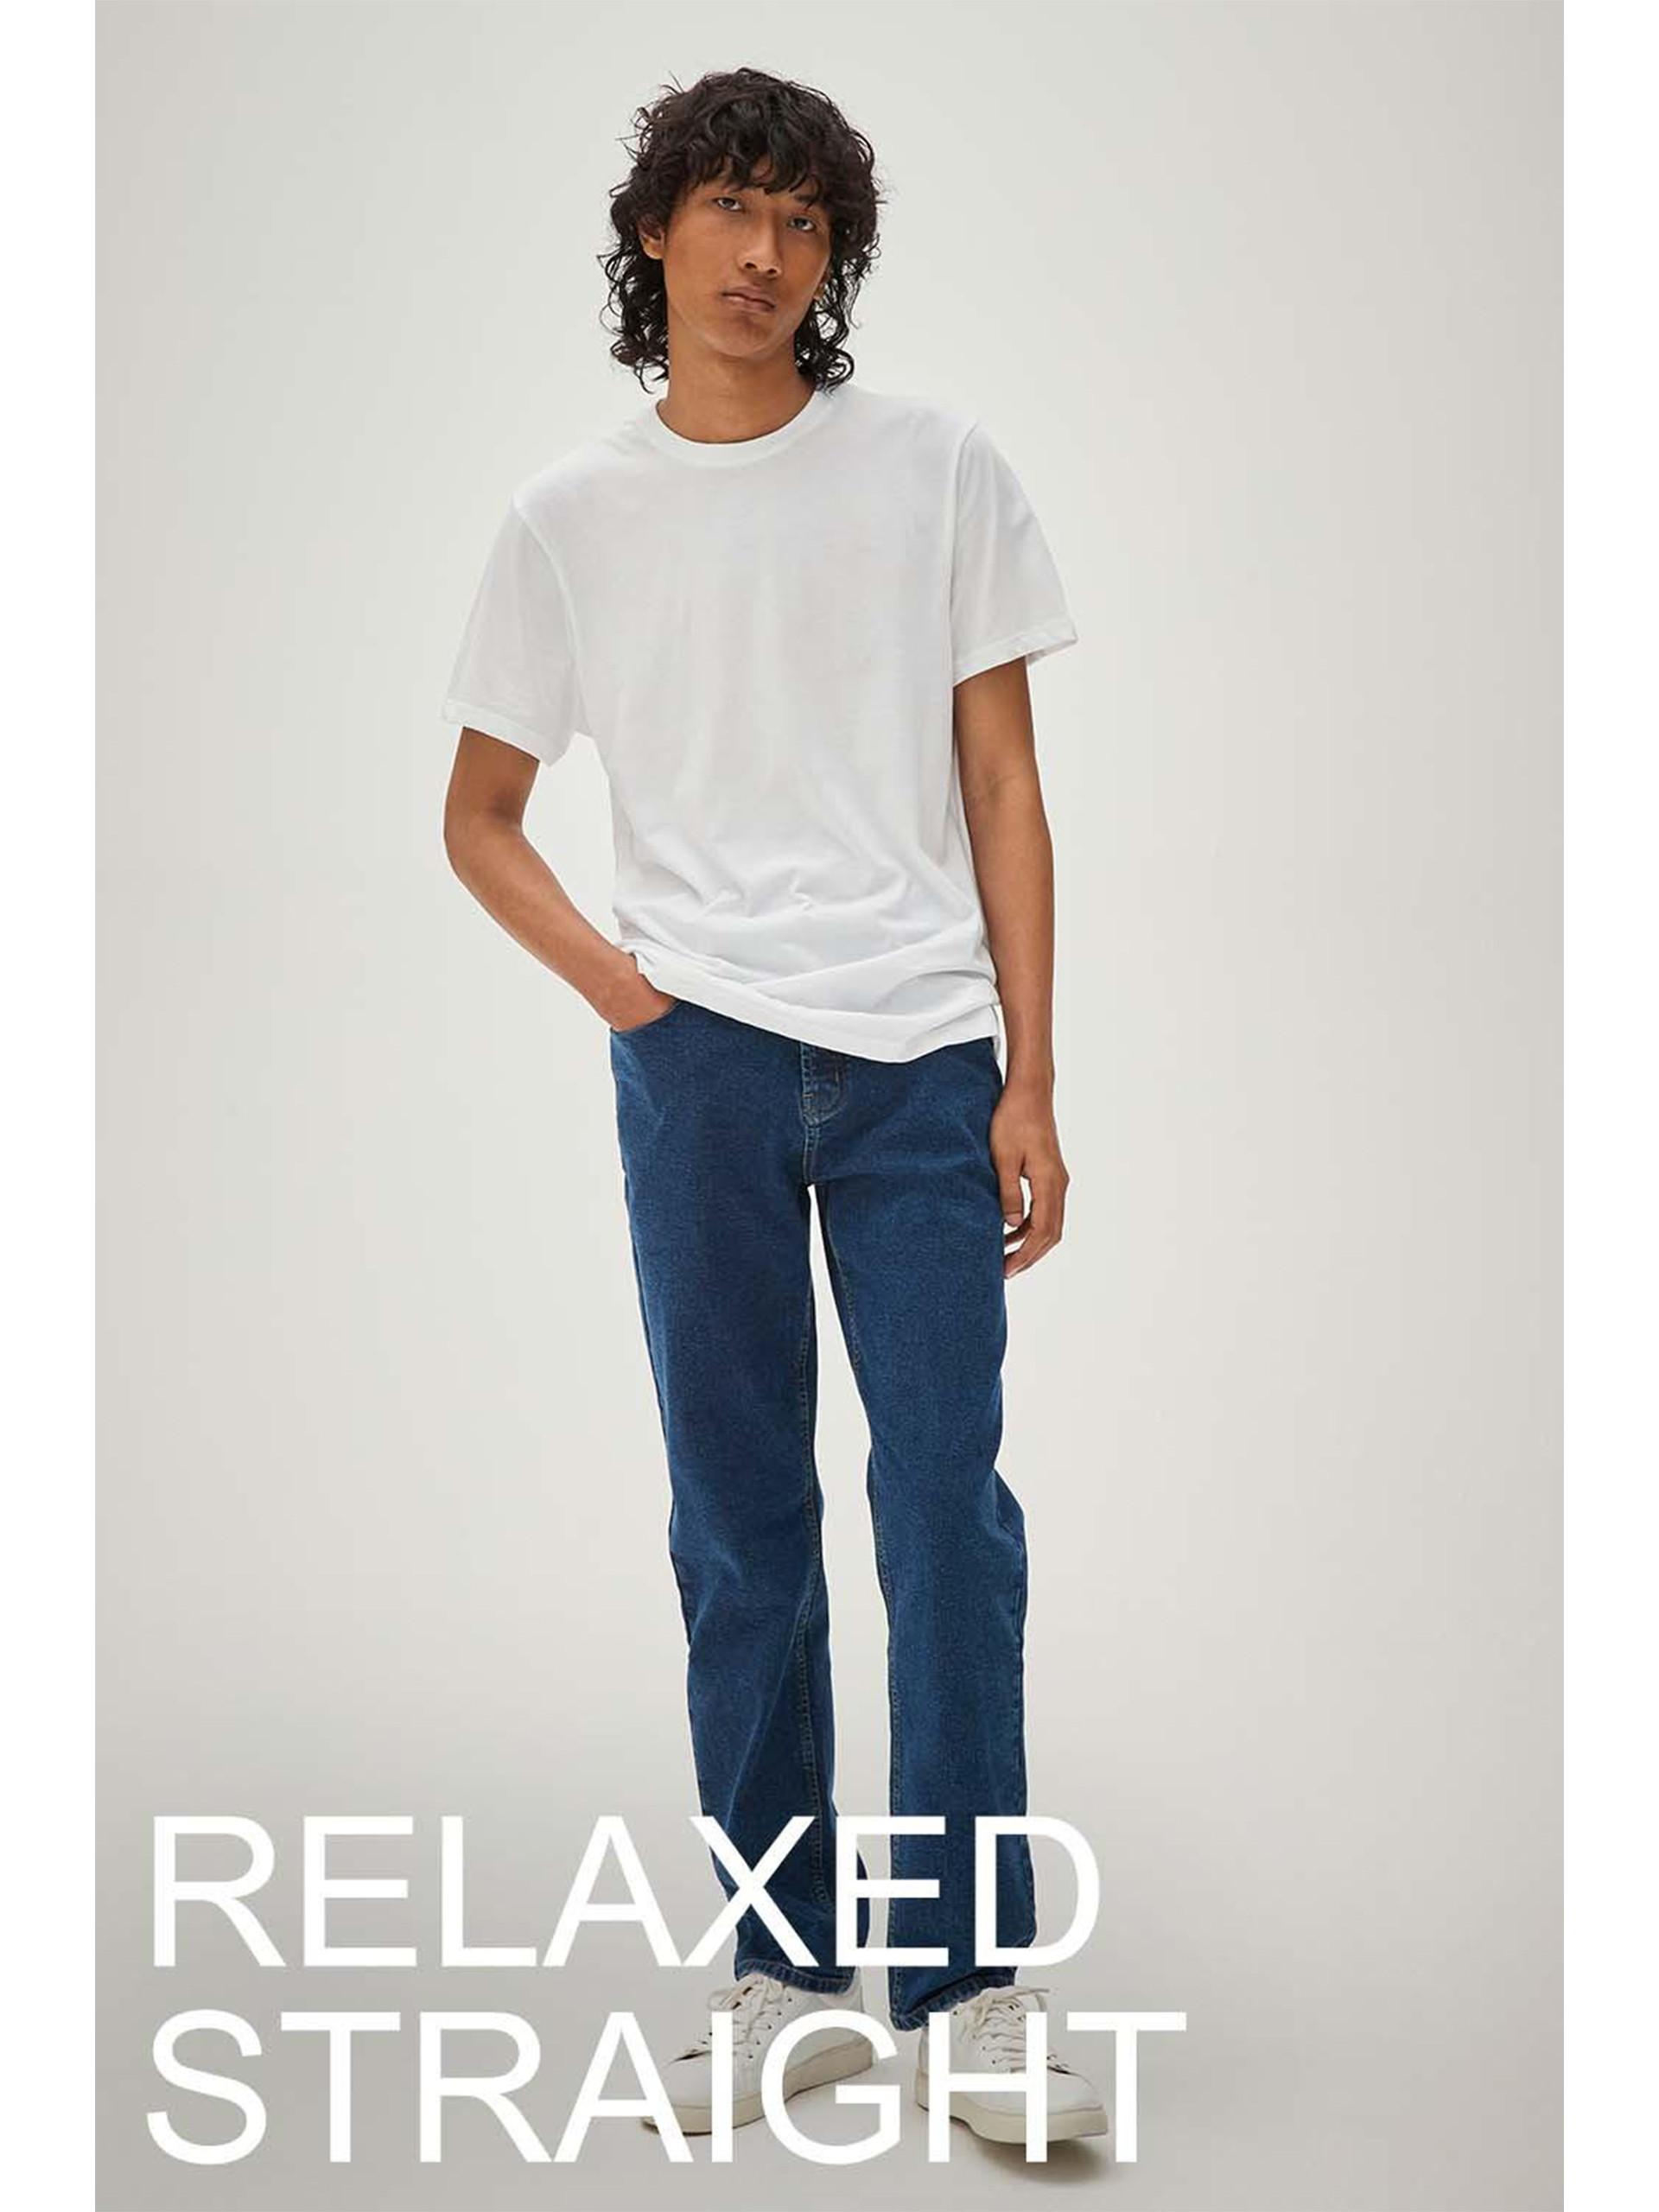 Model wears blue relaxed fit jeans